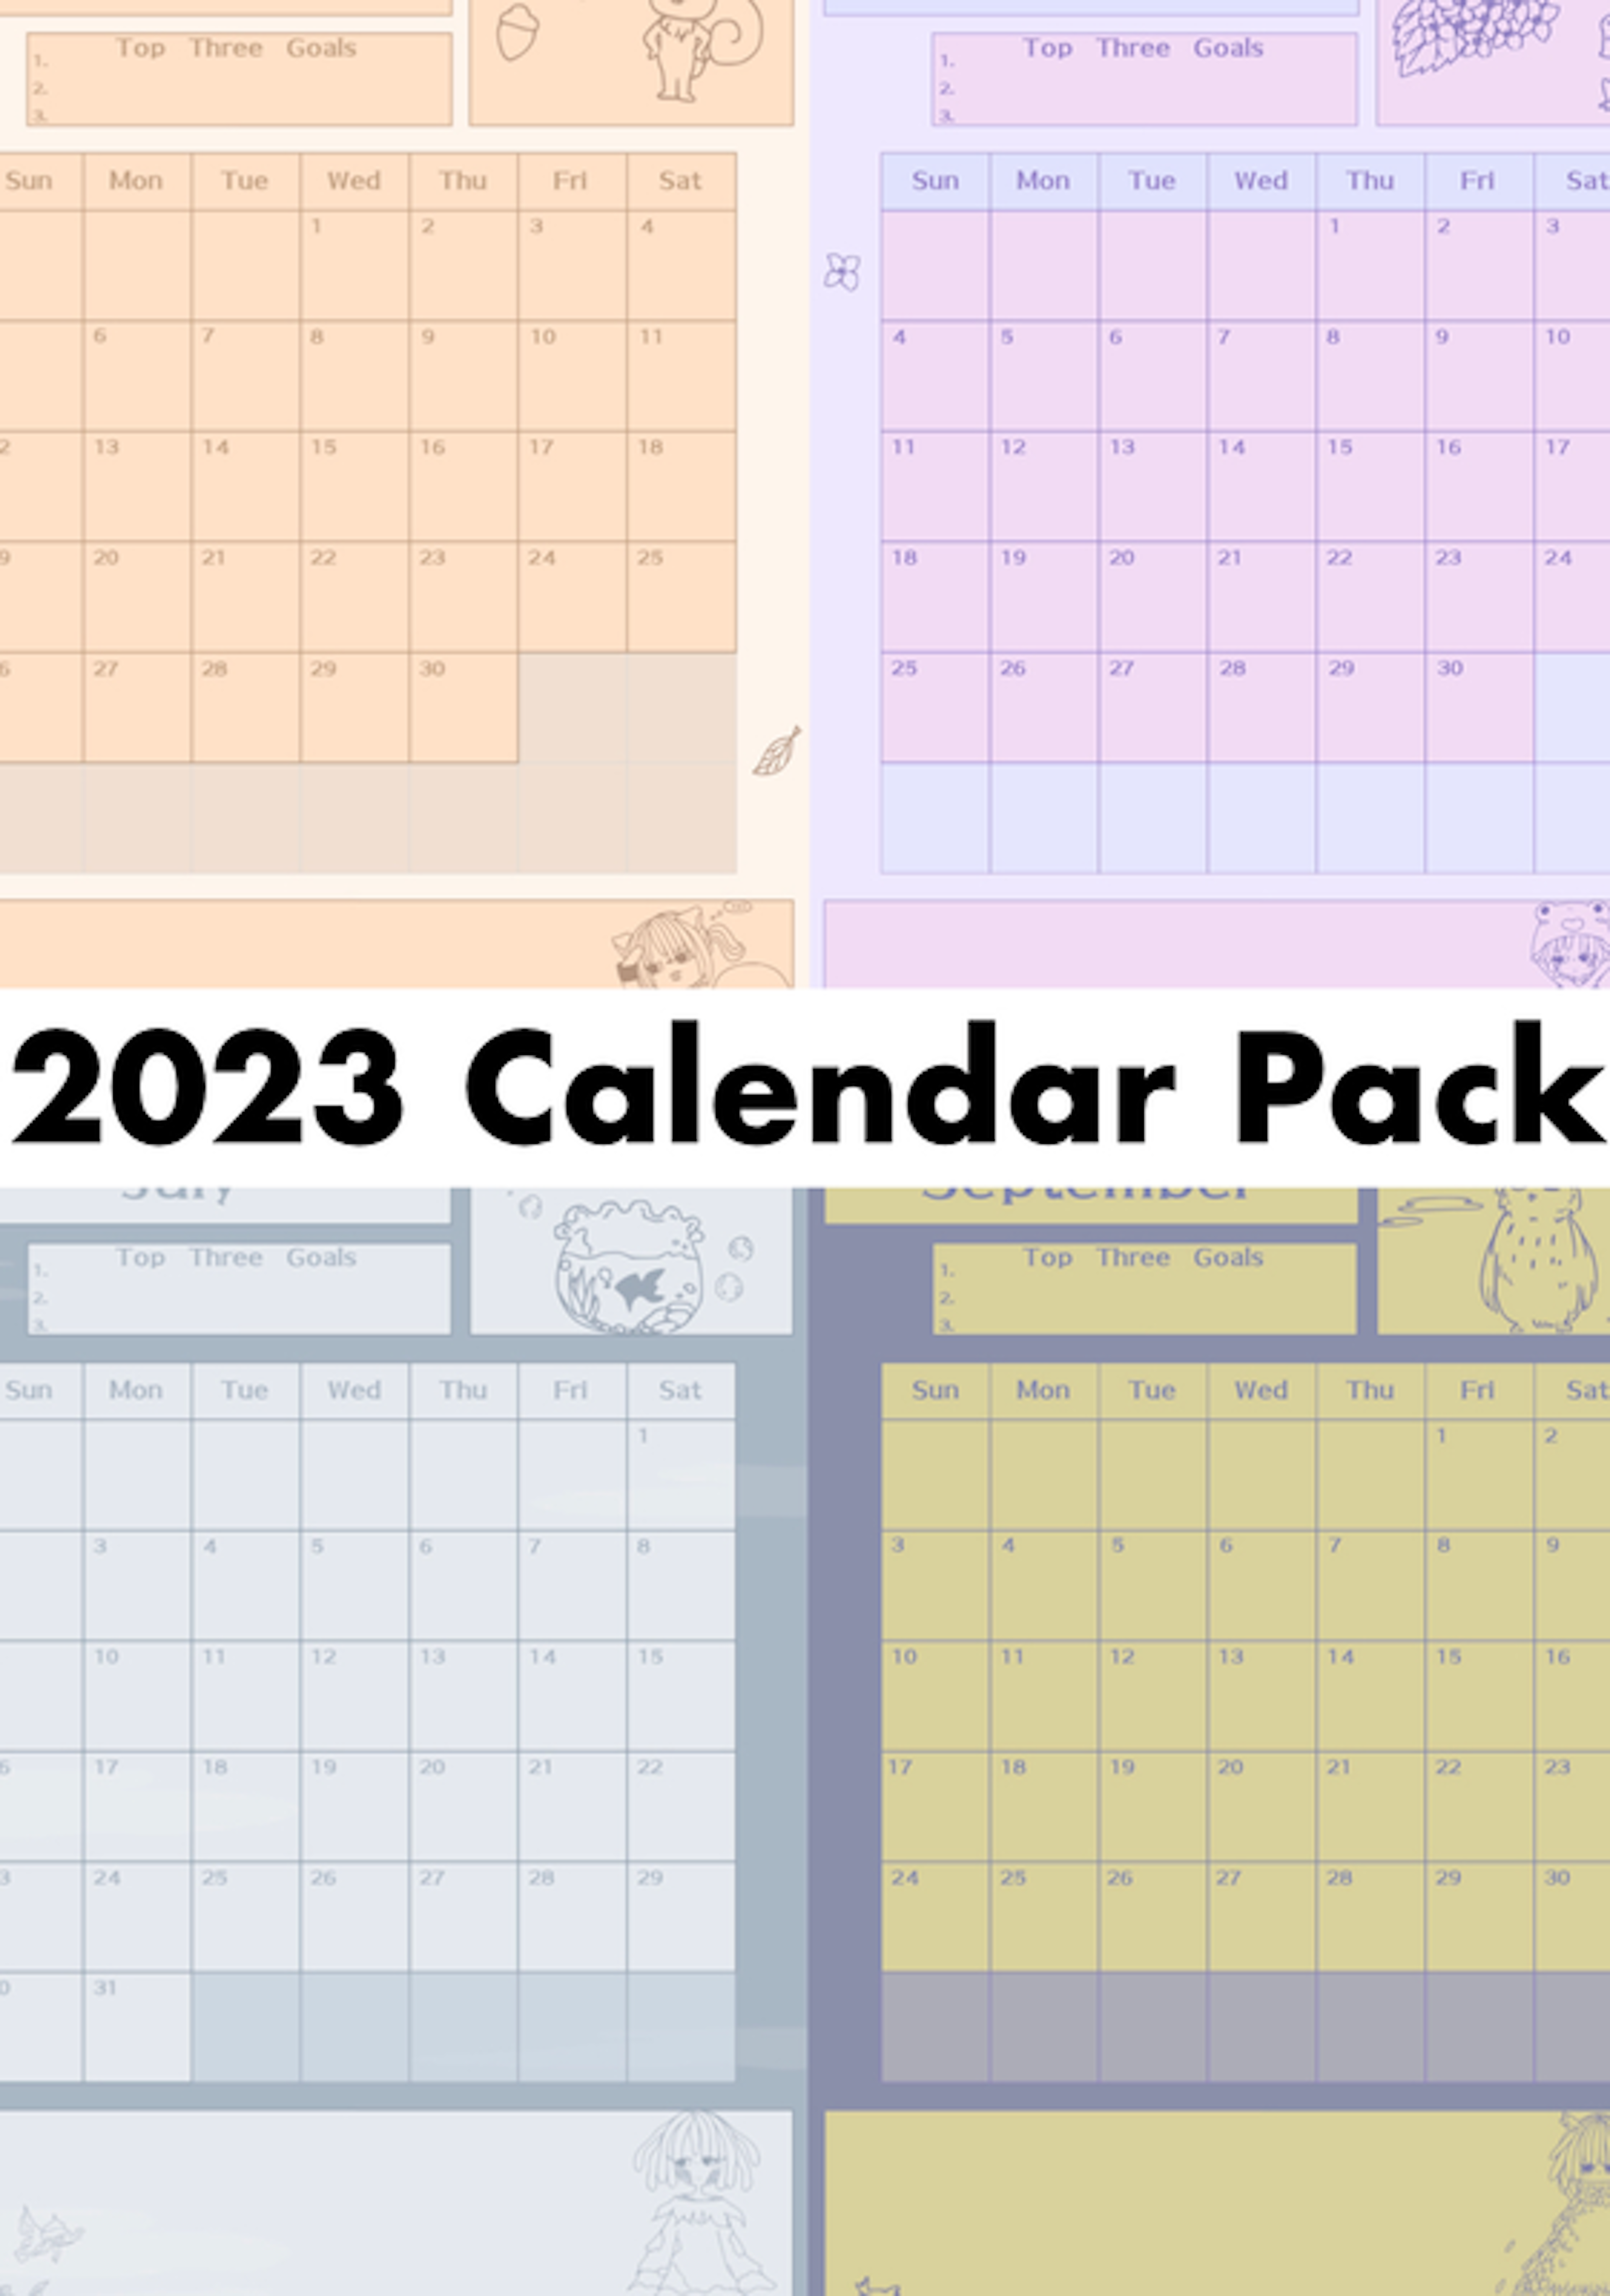 2023 Calendar Pack